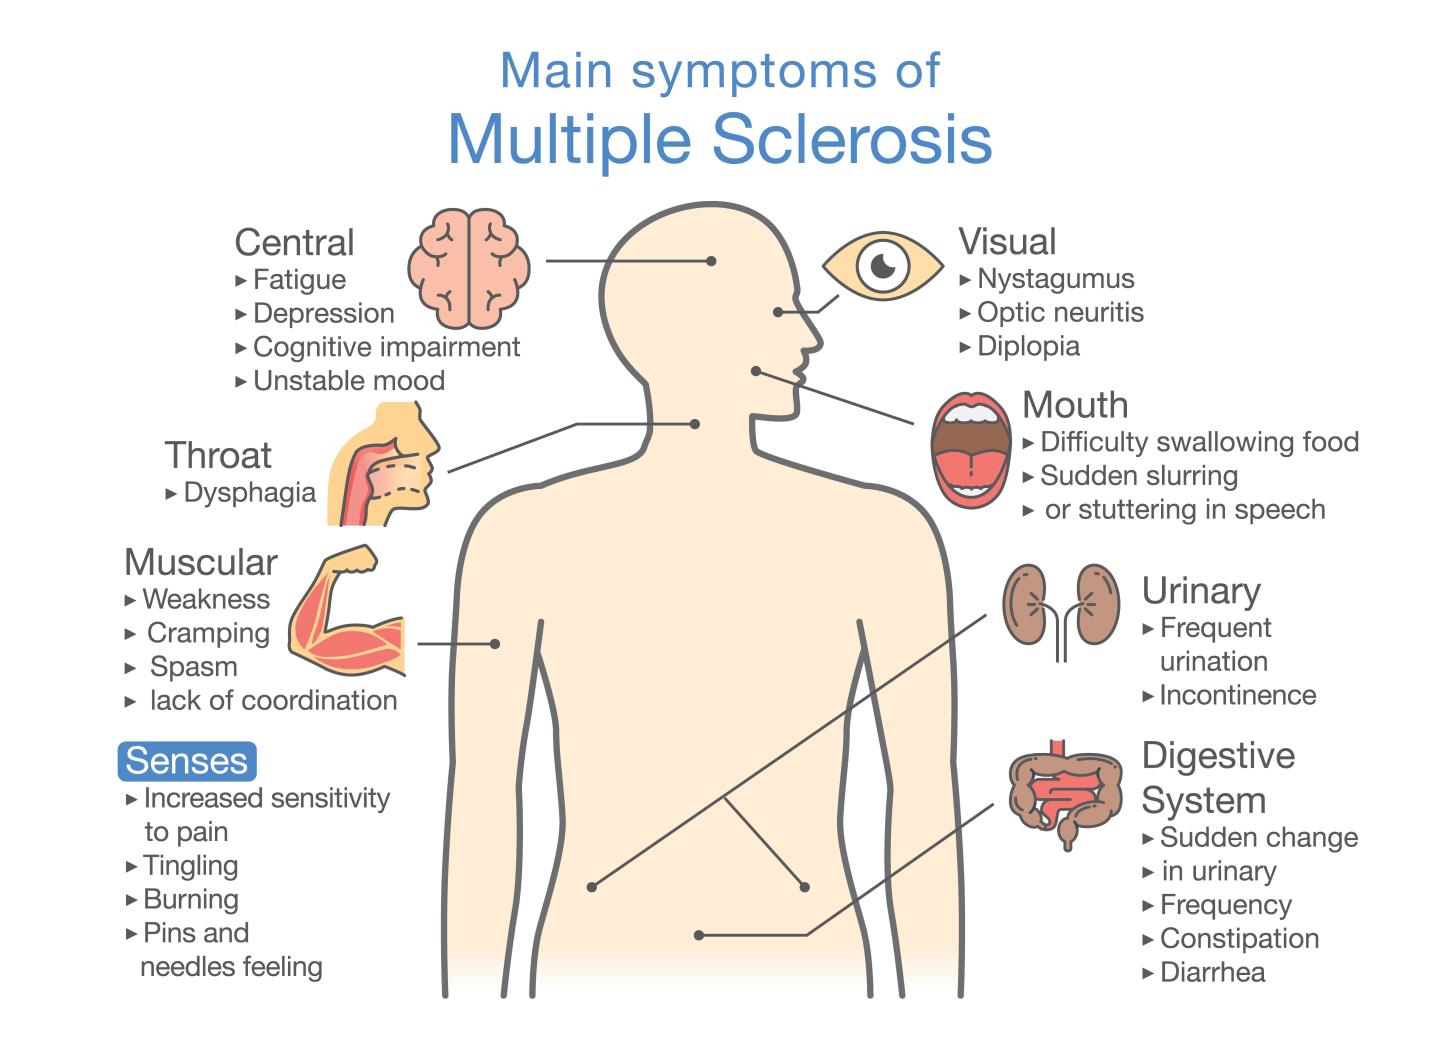 Main symptoms of Multiple Sclerosis.